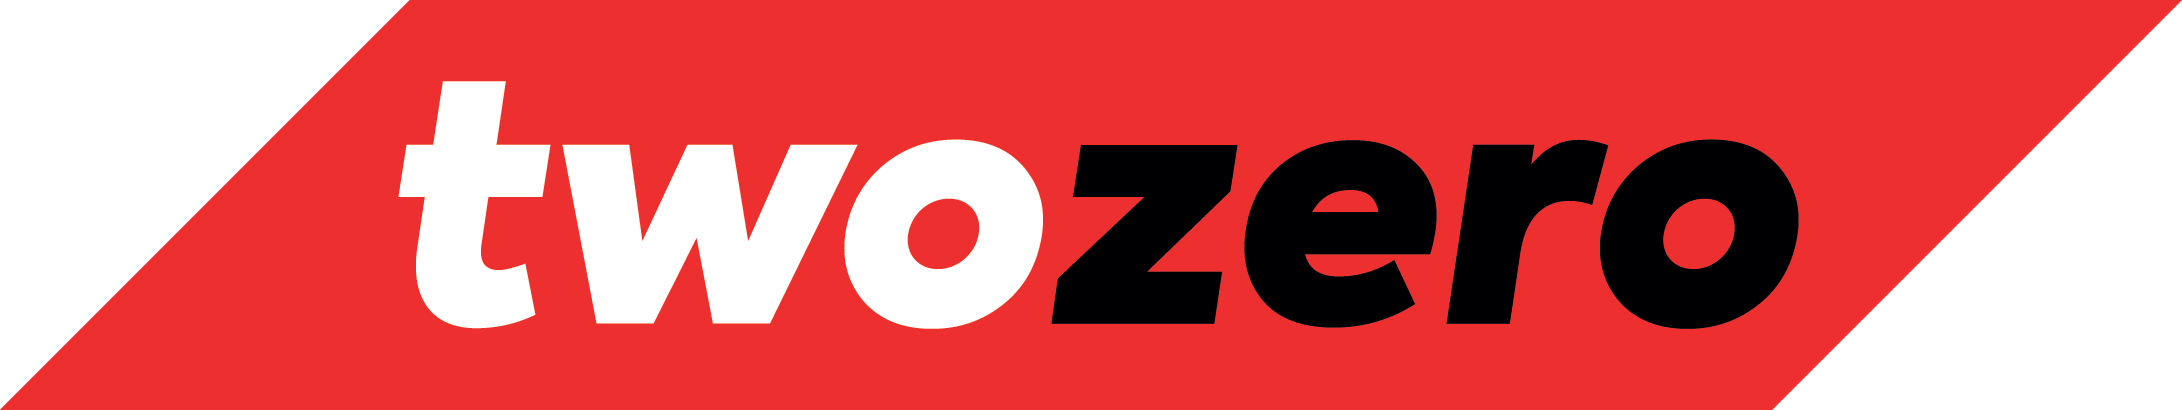 Twozero vc logo